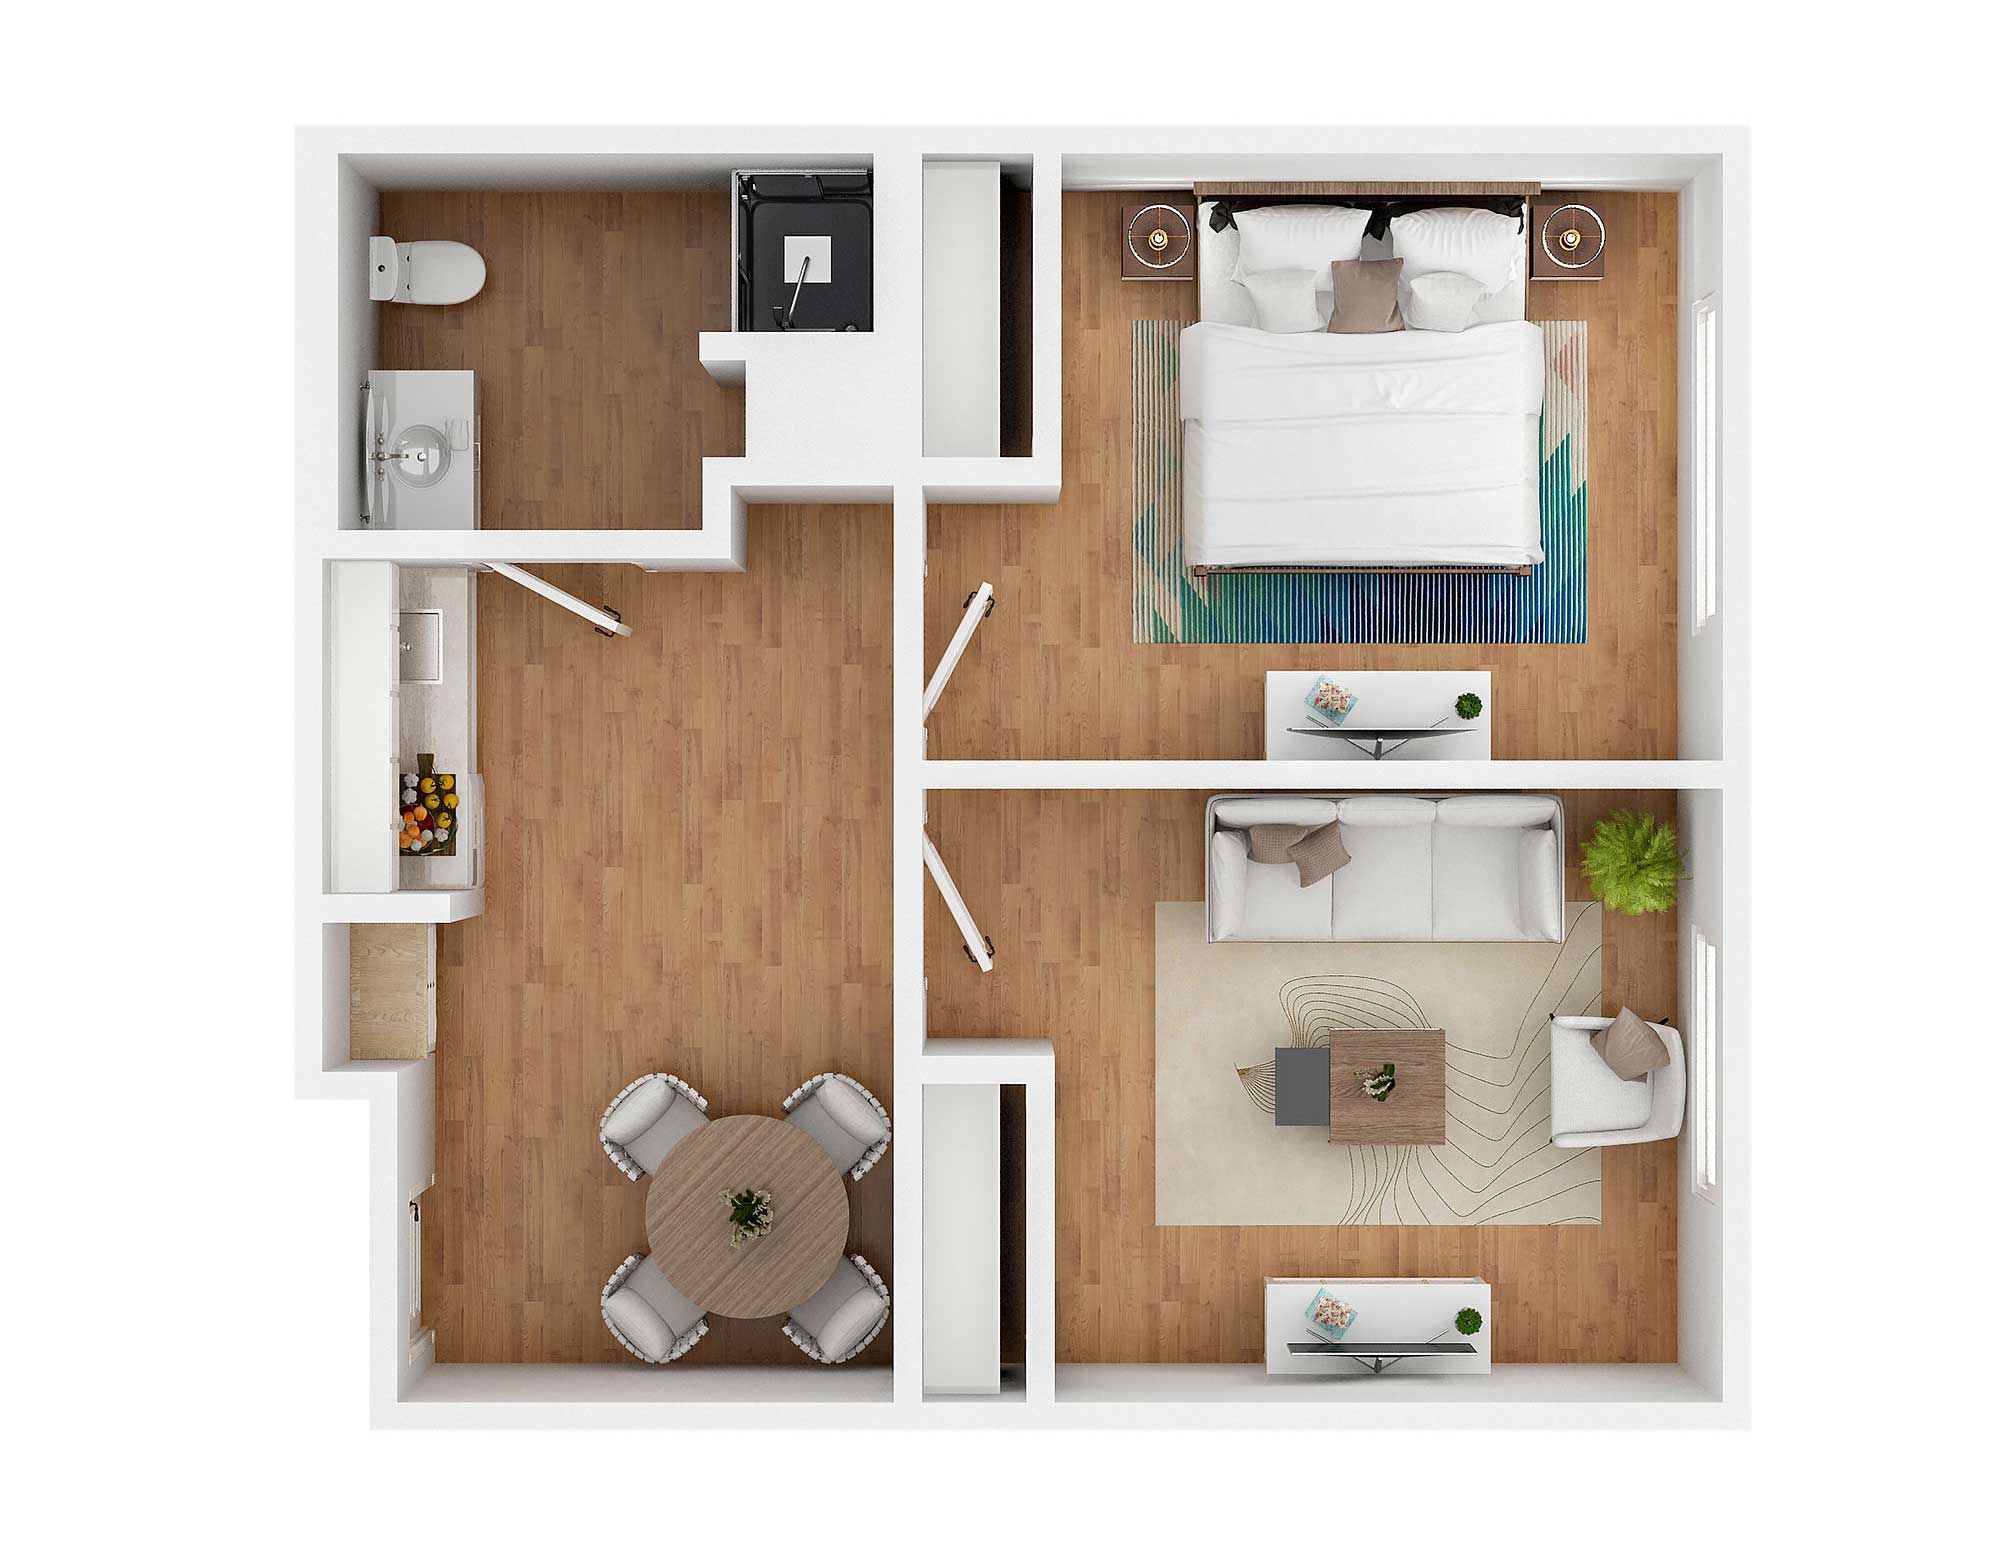 1-Bedroom Junior Suite Floor Plan at Sundale Senior Living in Huntsville, TX